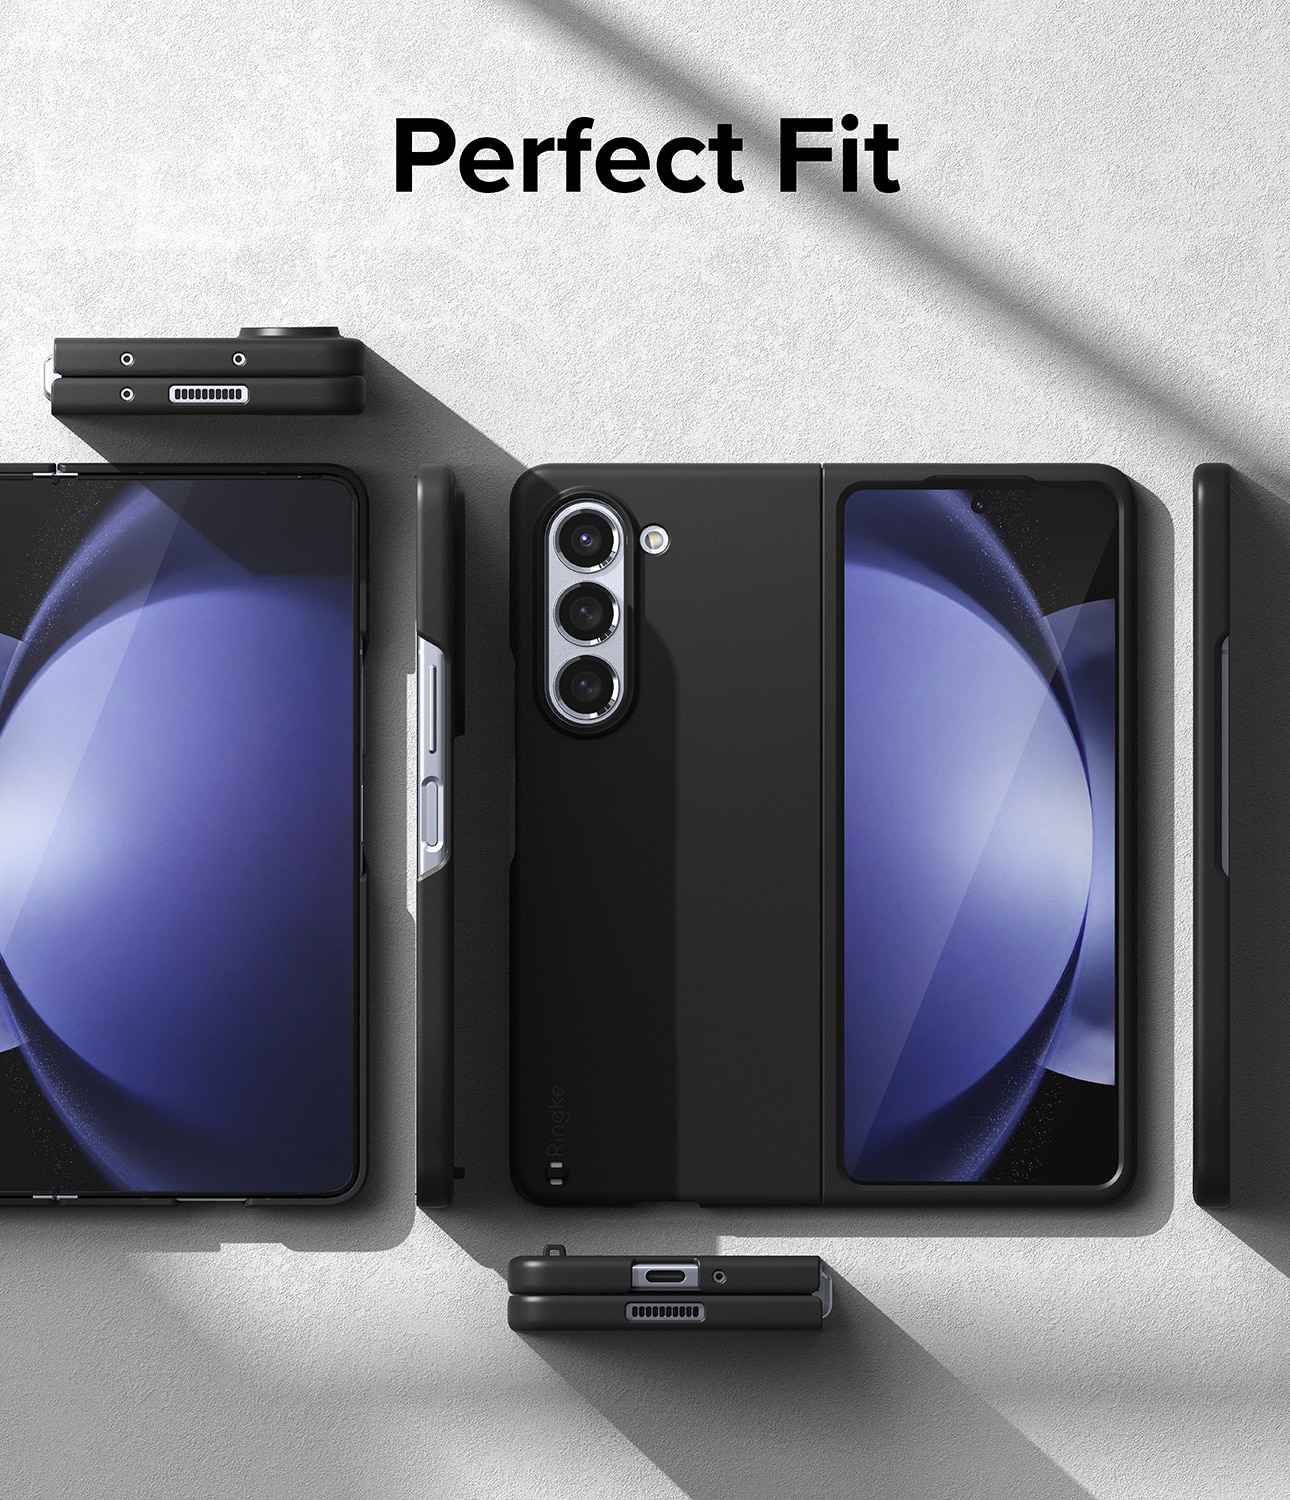 Samsung Galaxy Z Fold 5 Slim Skal, svart